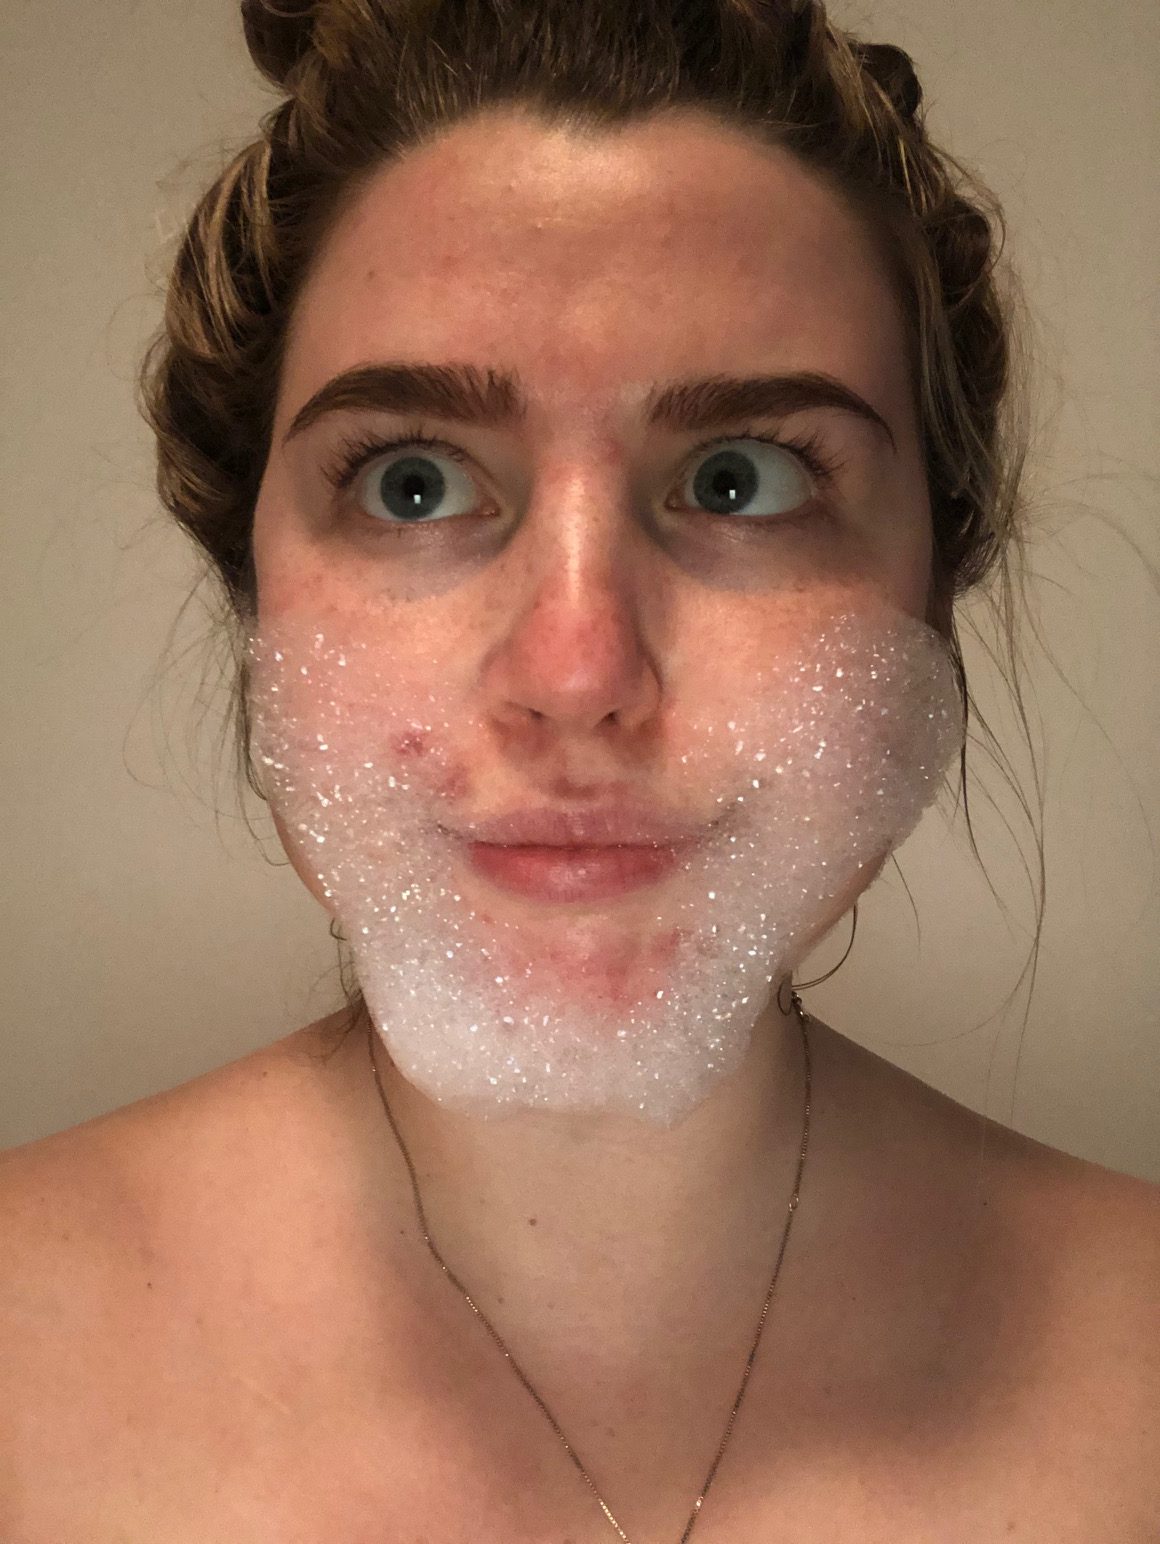 My bubble beard